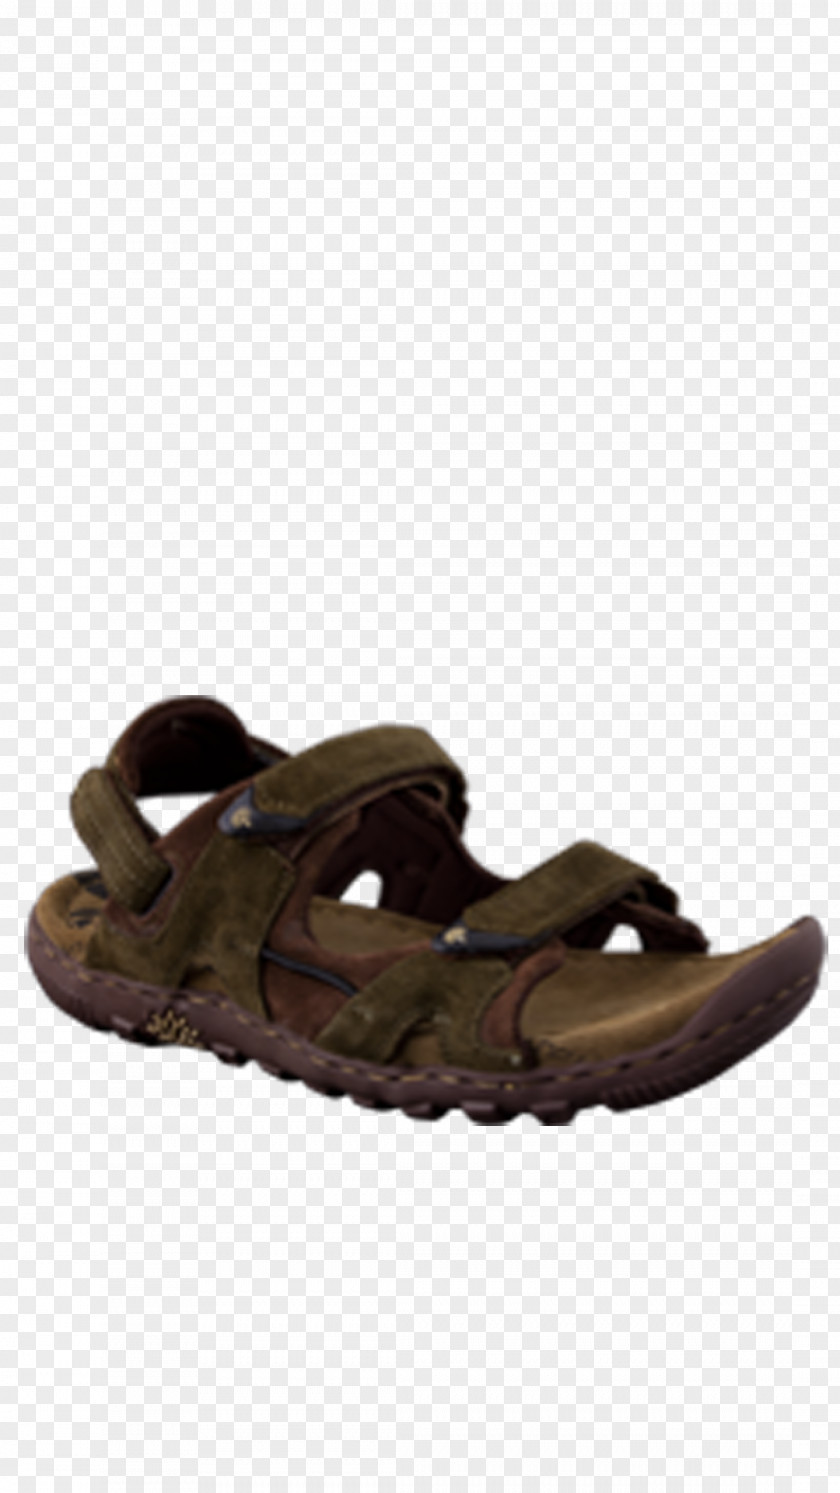 Sandal Slipper Online Shopping Discounts And Allowances Shoe PNG